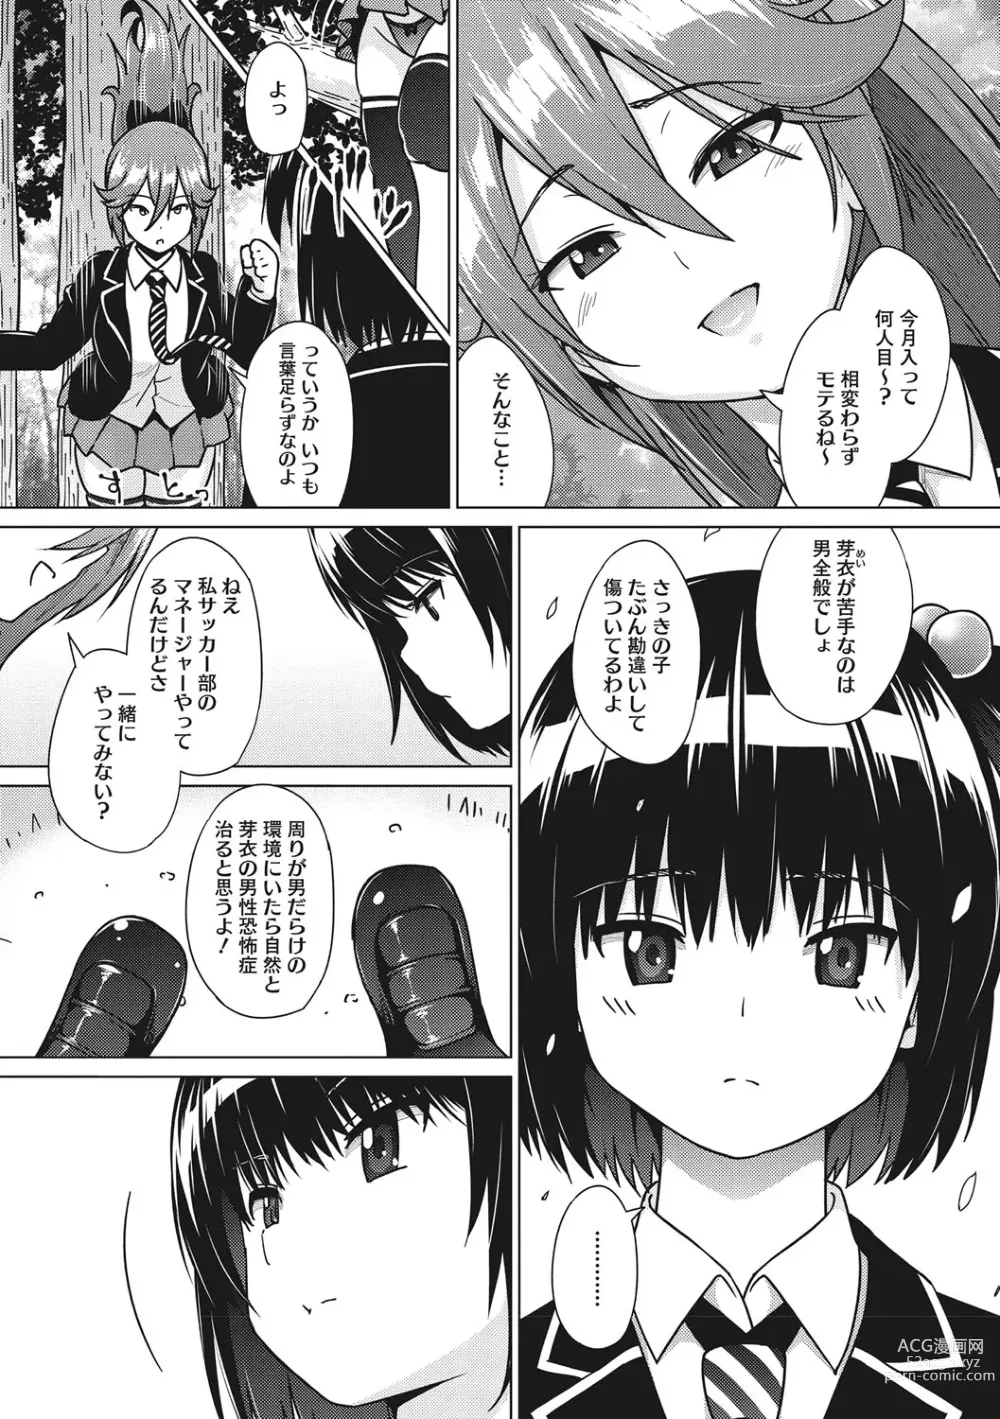 Page 6 of manga Netorare Onapet